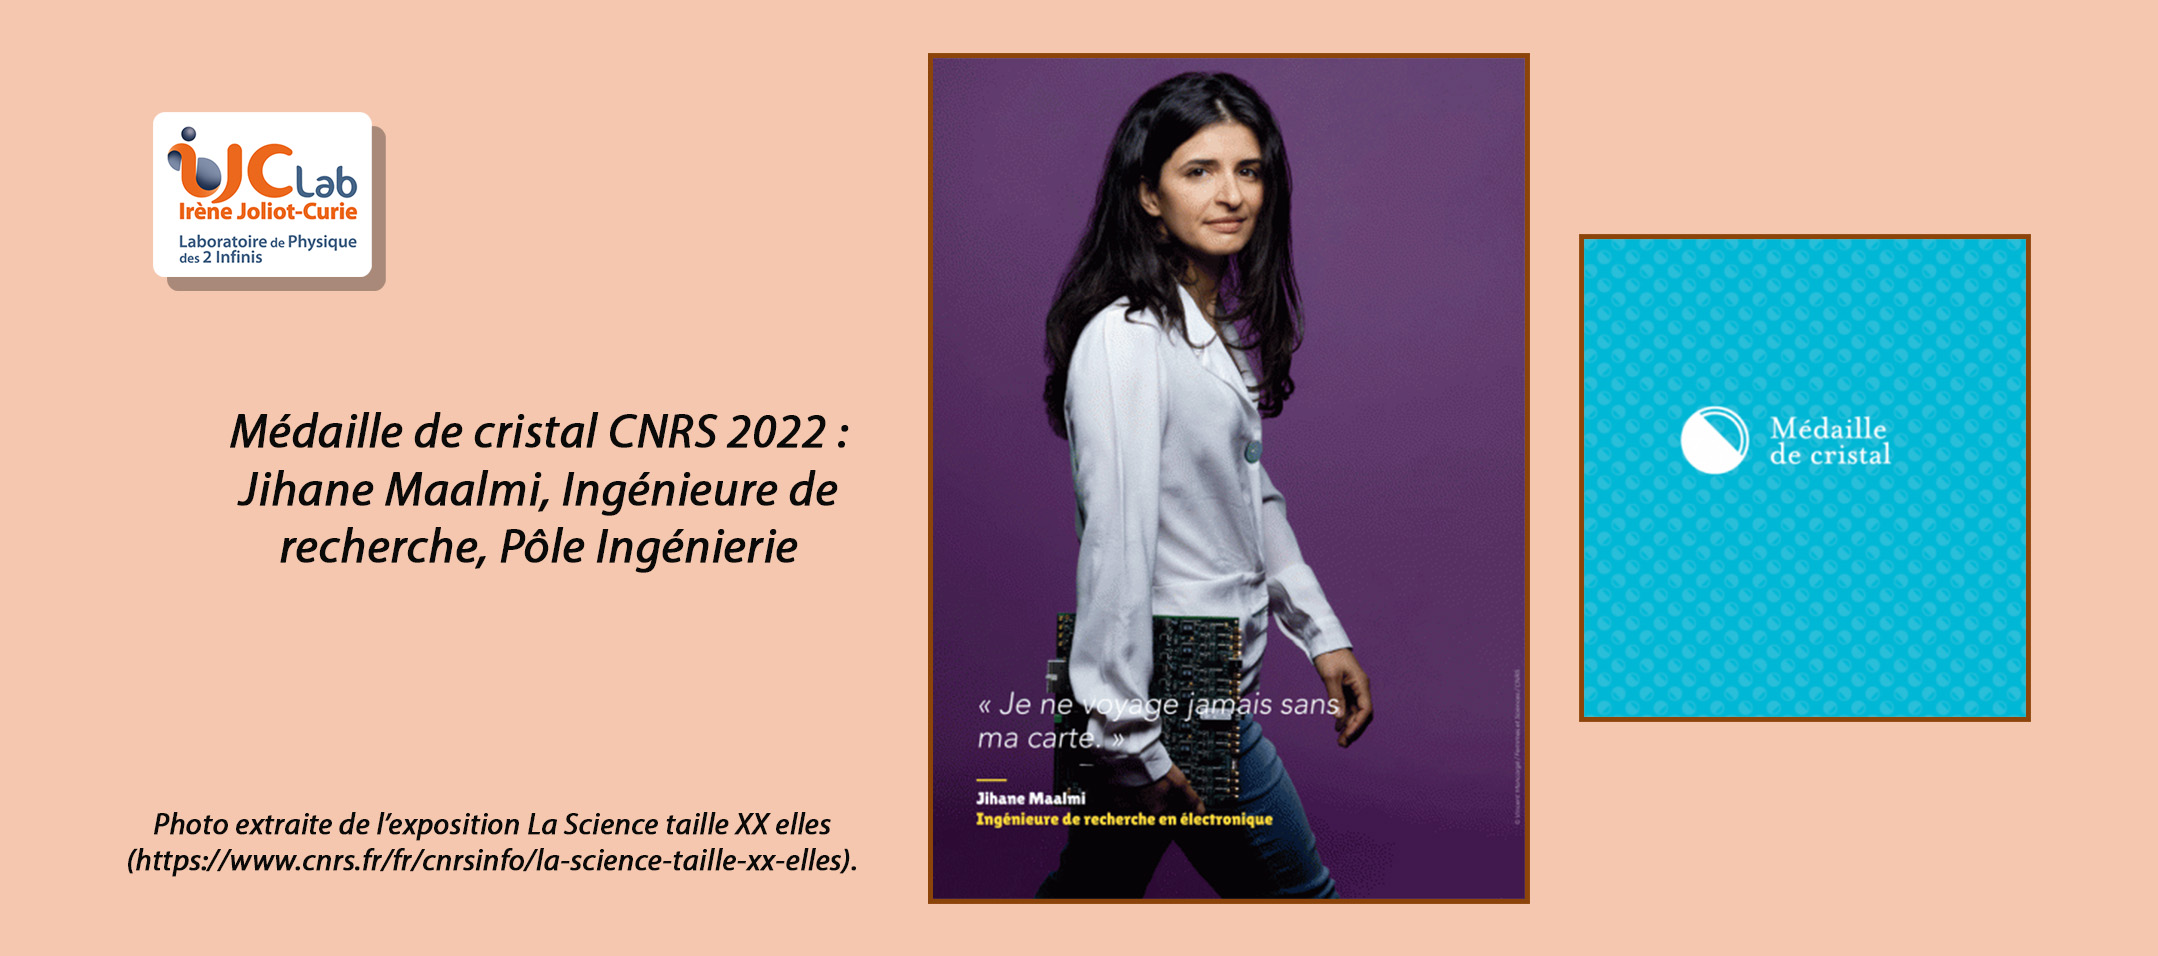 Jihane Maalmi awarded with the 2022 CNRS Crystal Medal